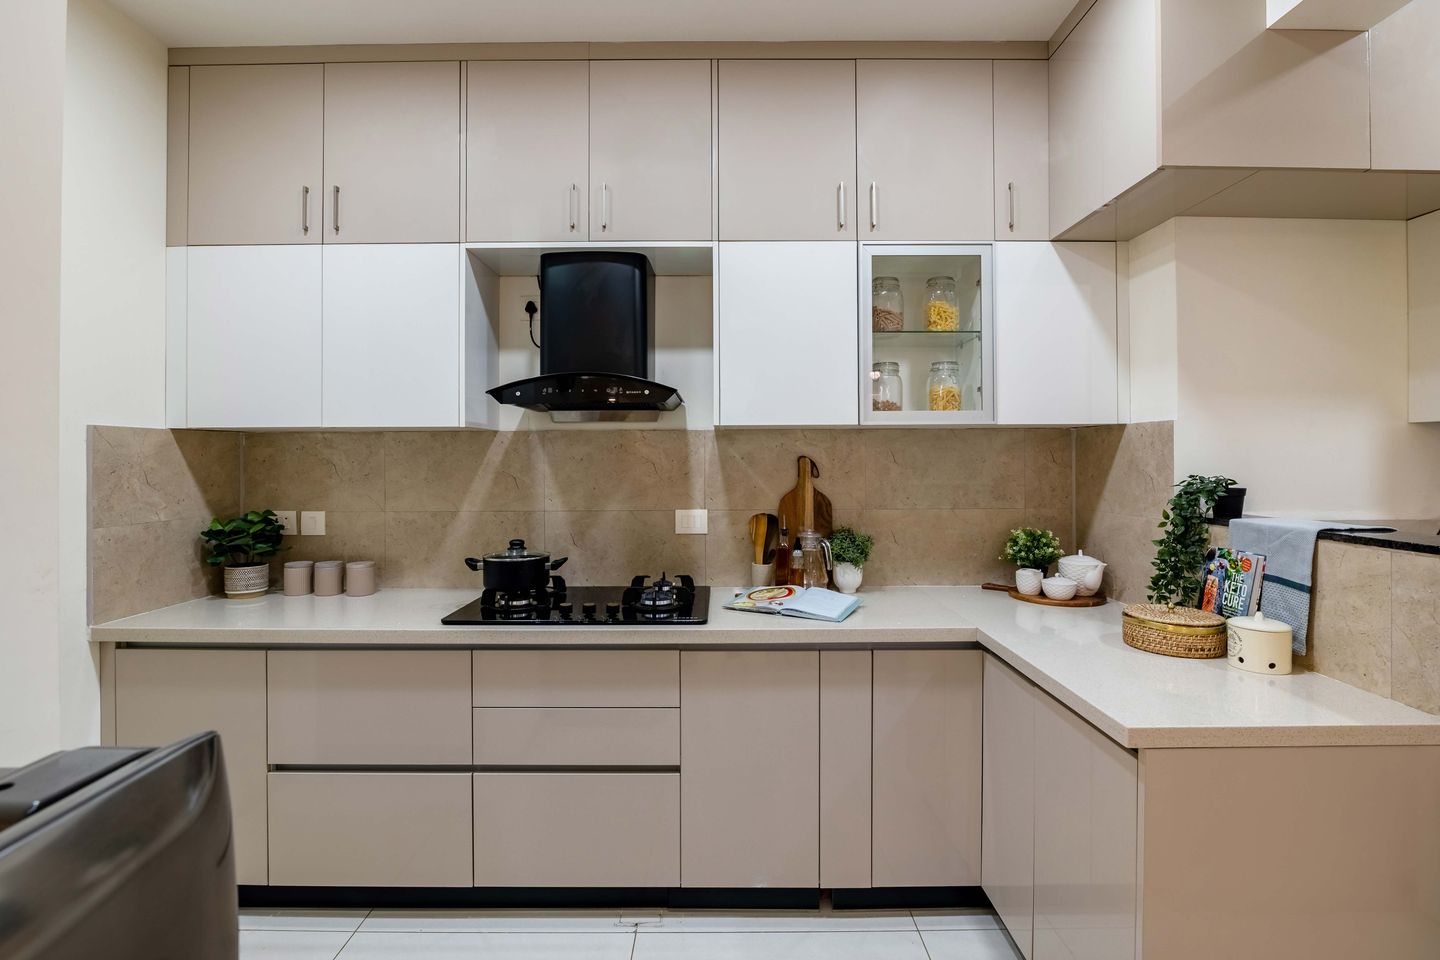 Kitchen Design With Corian Countertop - Livspace